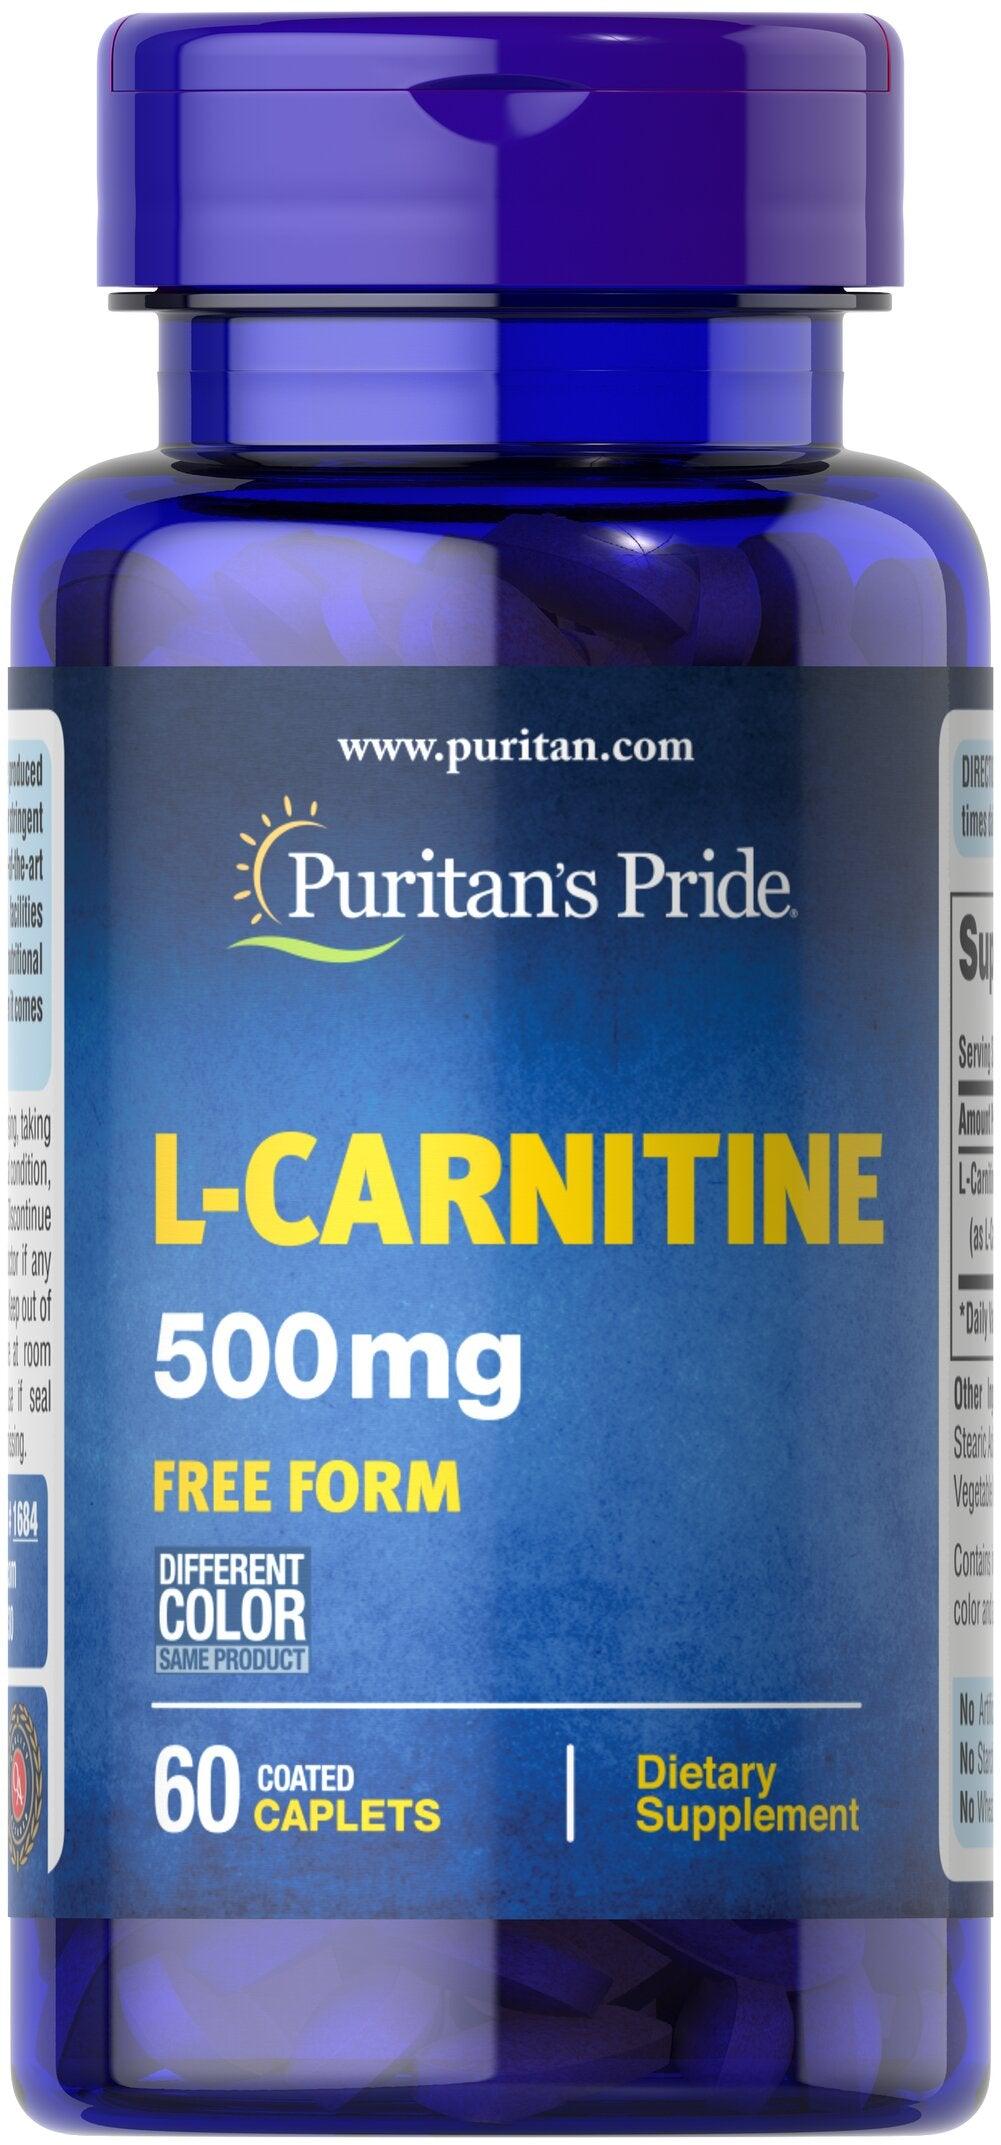 Puritan's Pride L-Carnitine 500mg - mondialpharma.com